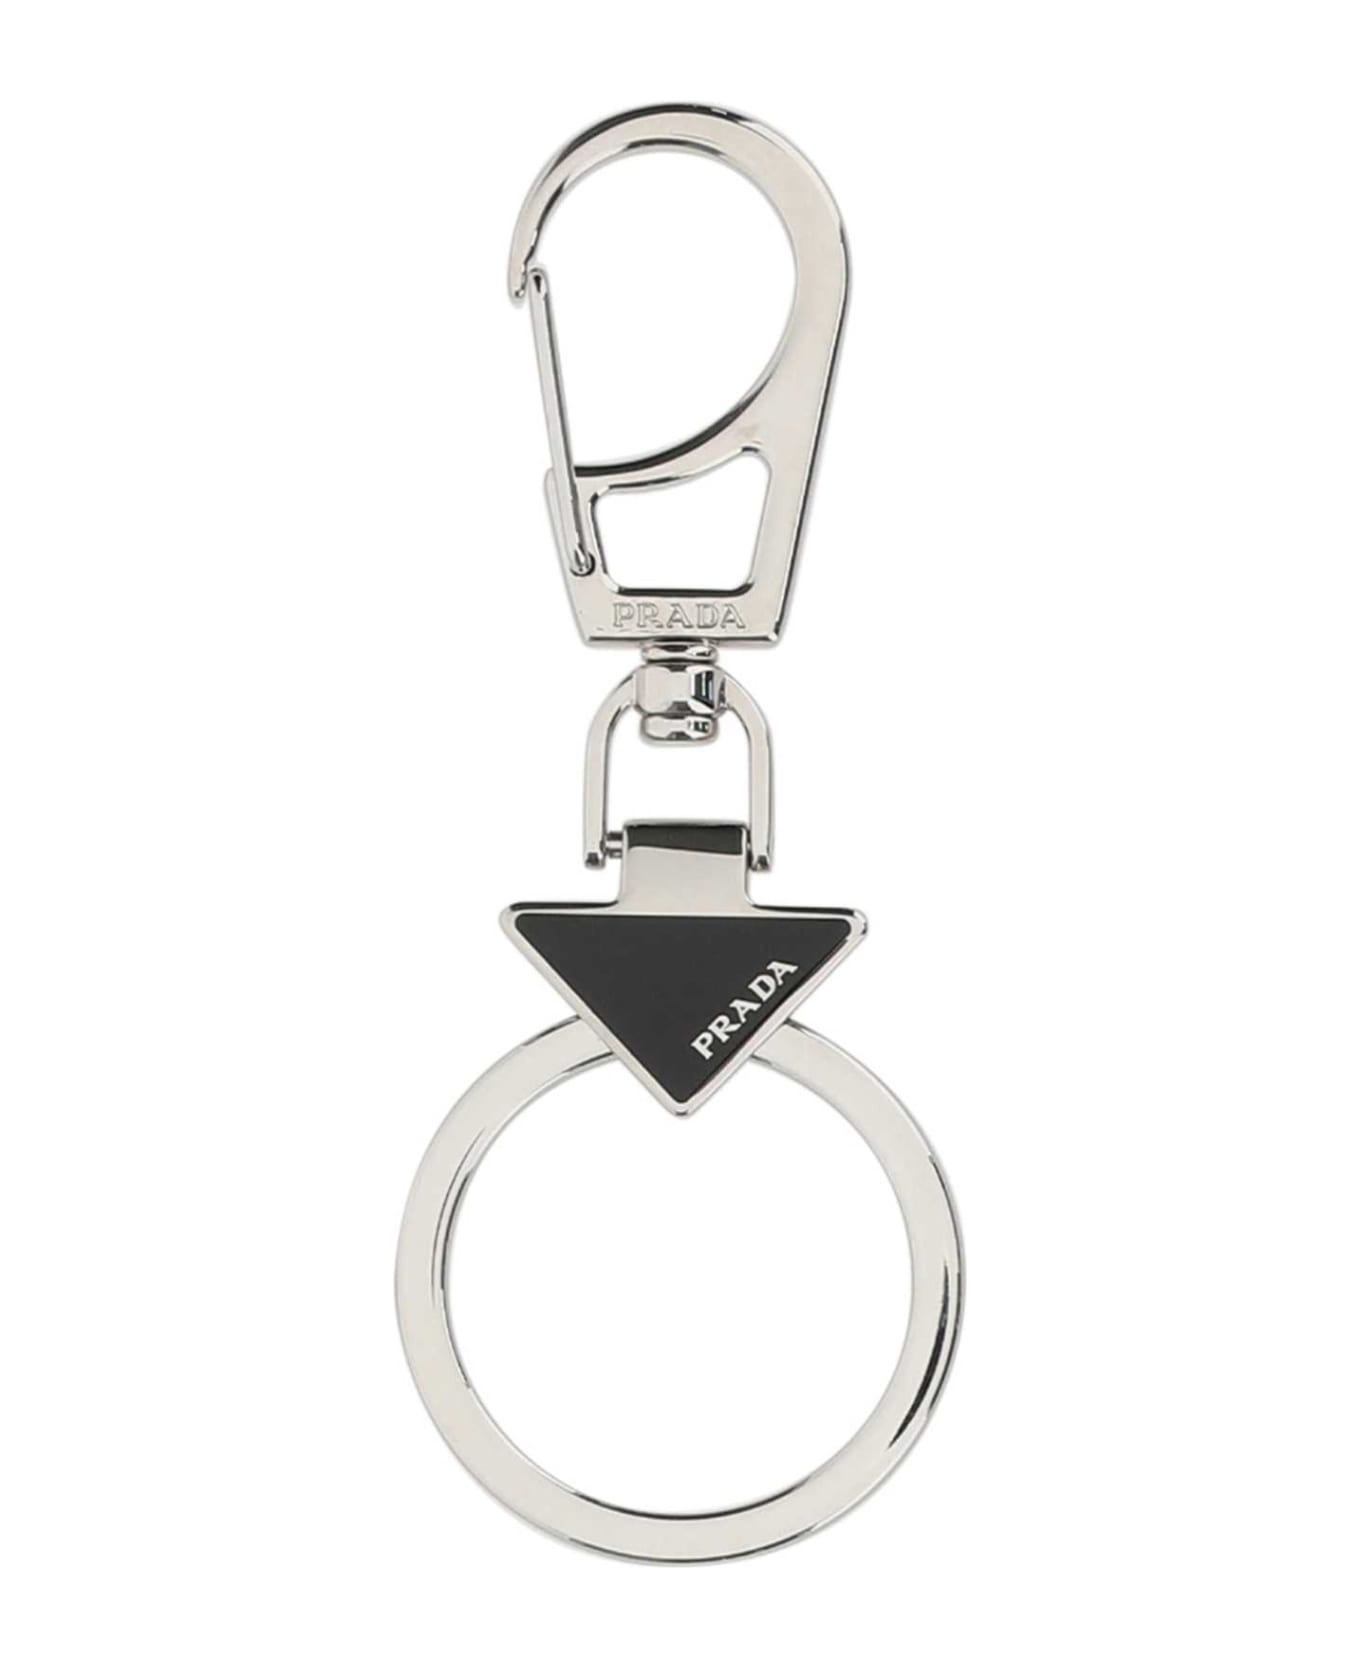 Prada Silver Metal Key Ring - F0002